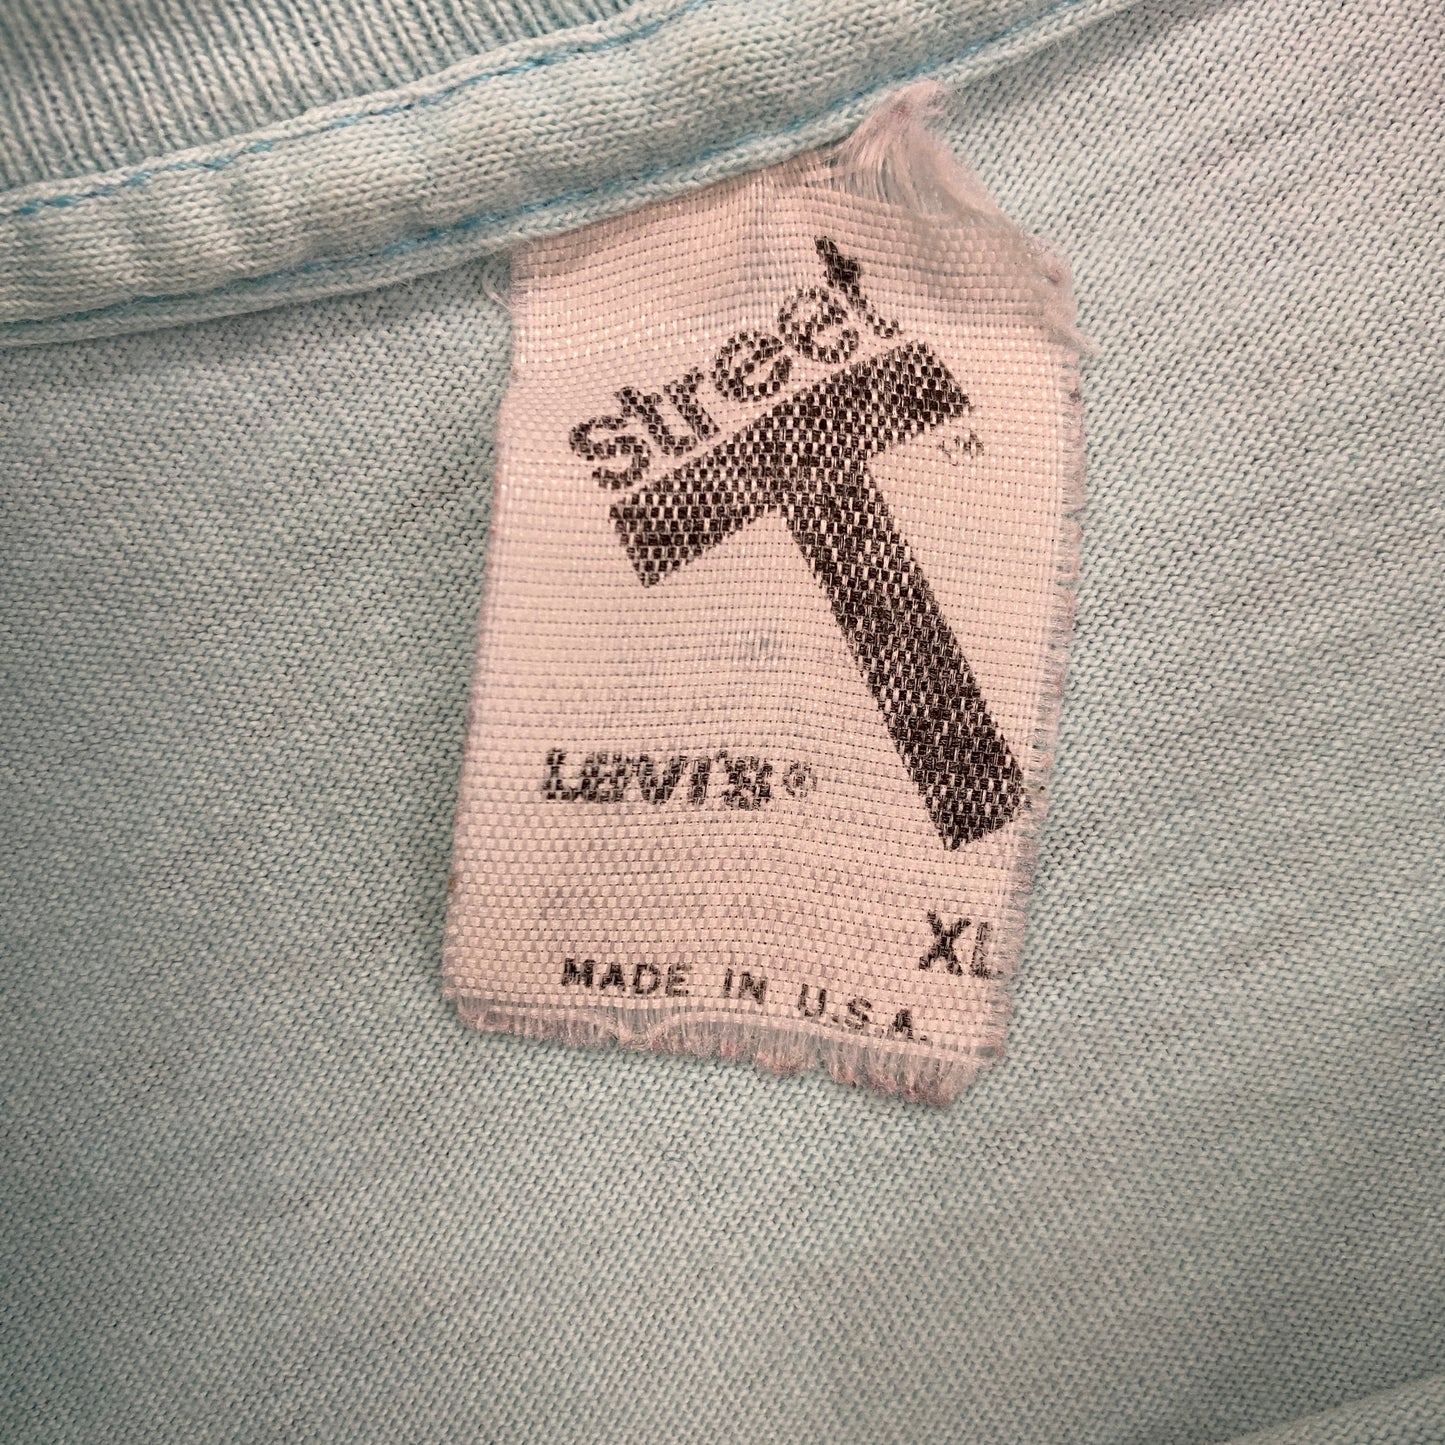 Vintage 1990 Levi Strauss "501 Street" Single Stitch Tee - Size XL